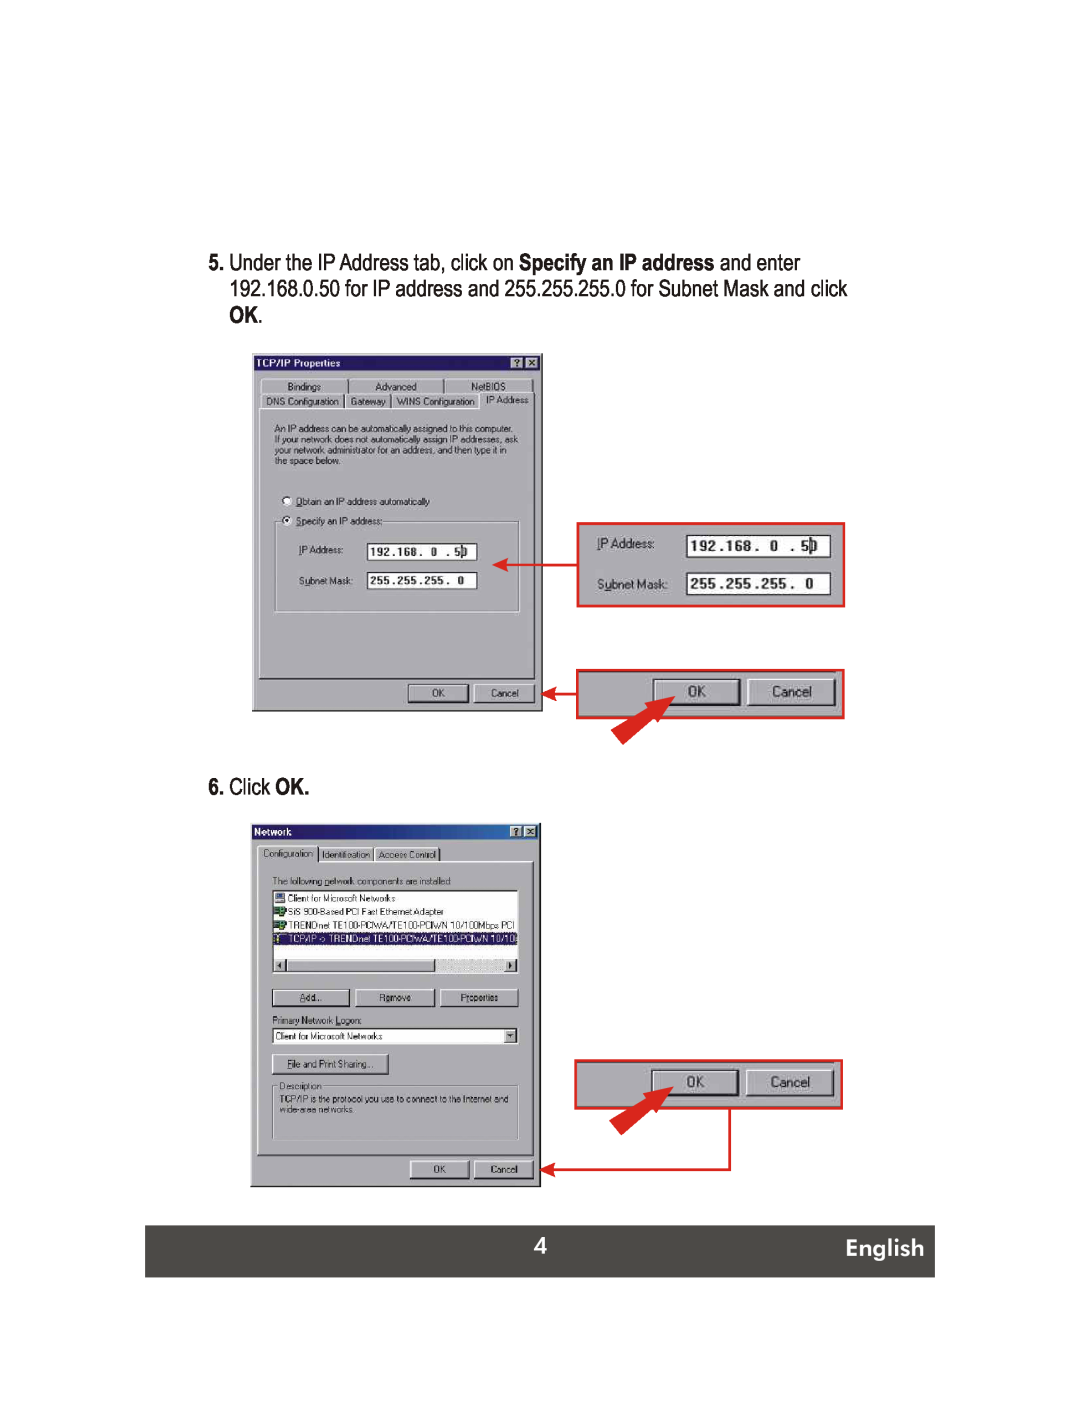 TRENDnet TEW-453APB, Net Spot Wireless Access Point manual Click OK, English 